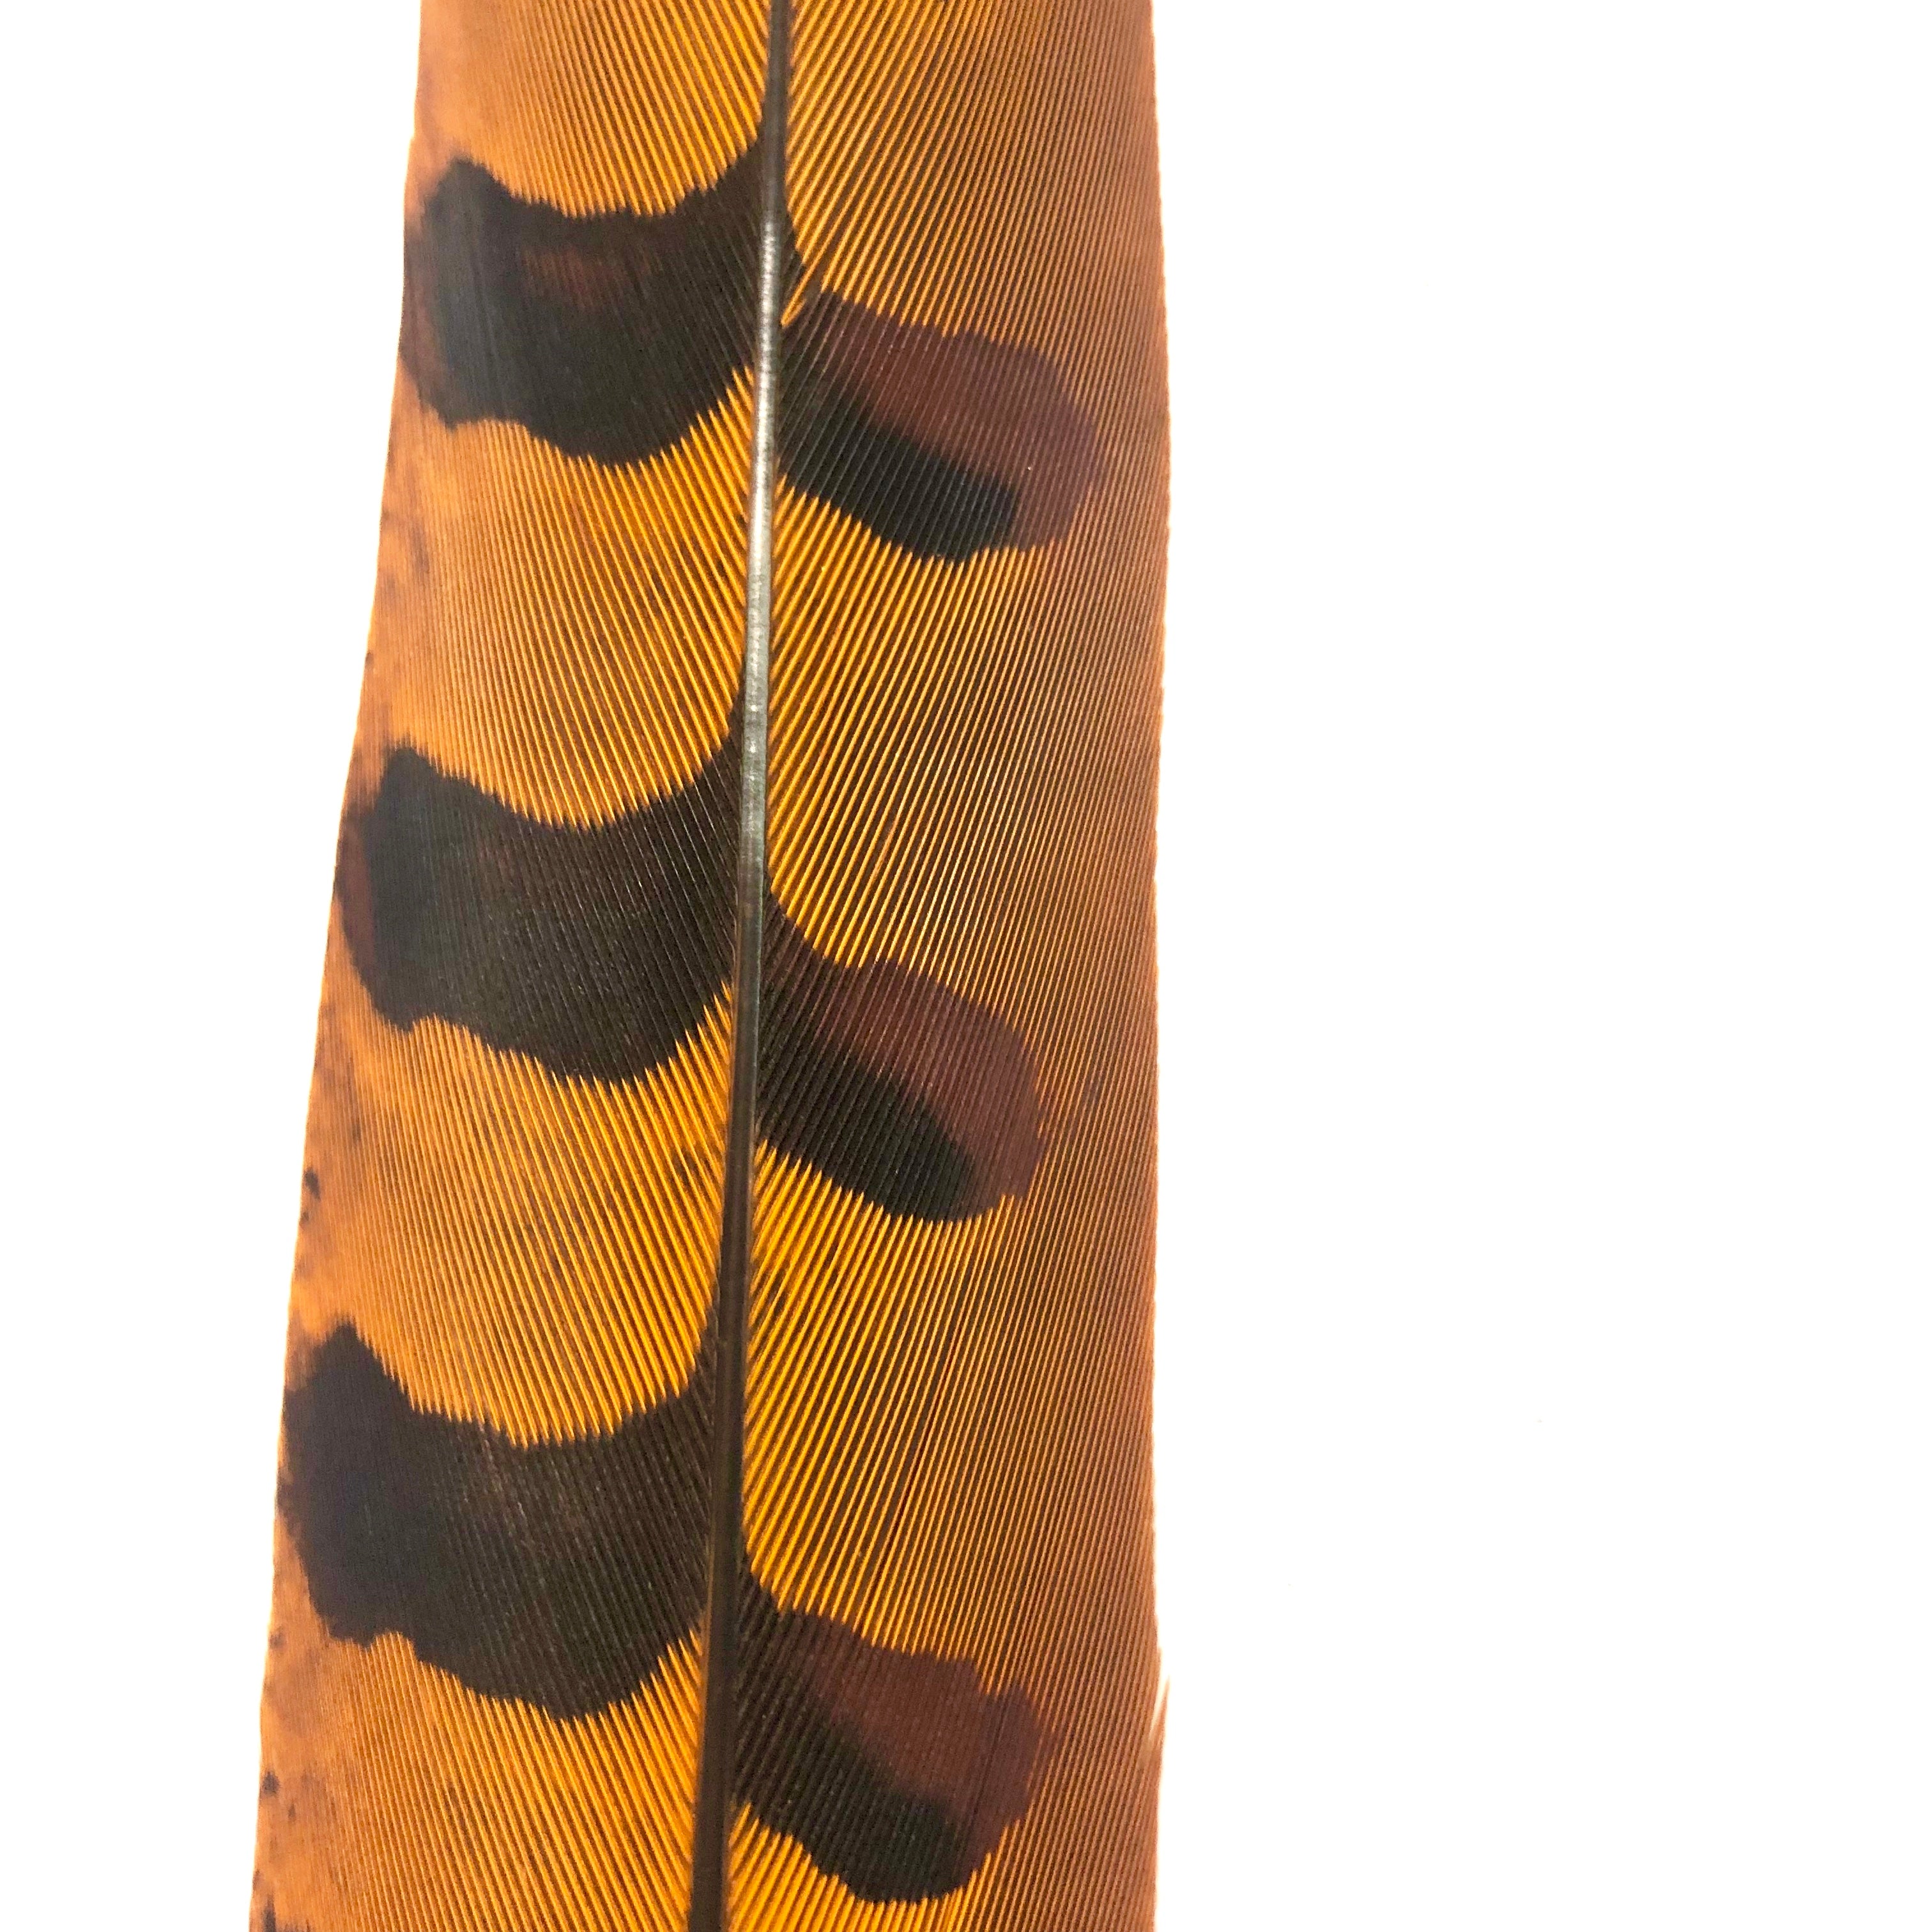 30" to 32" Reeves Pheasant Tail Feather - Orange